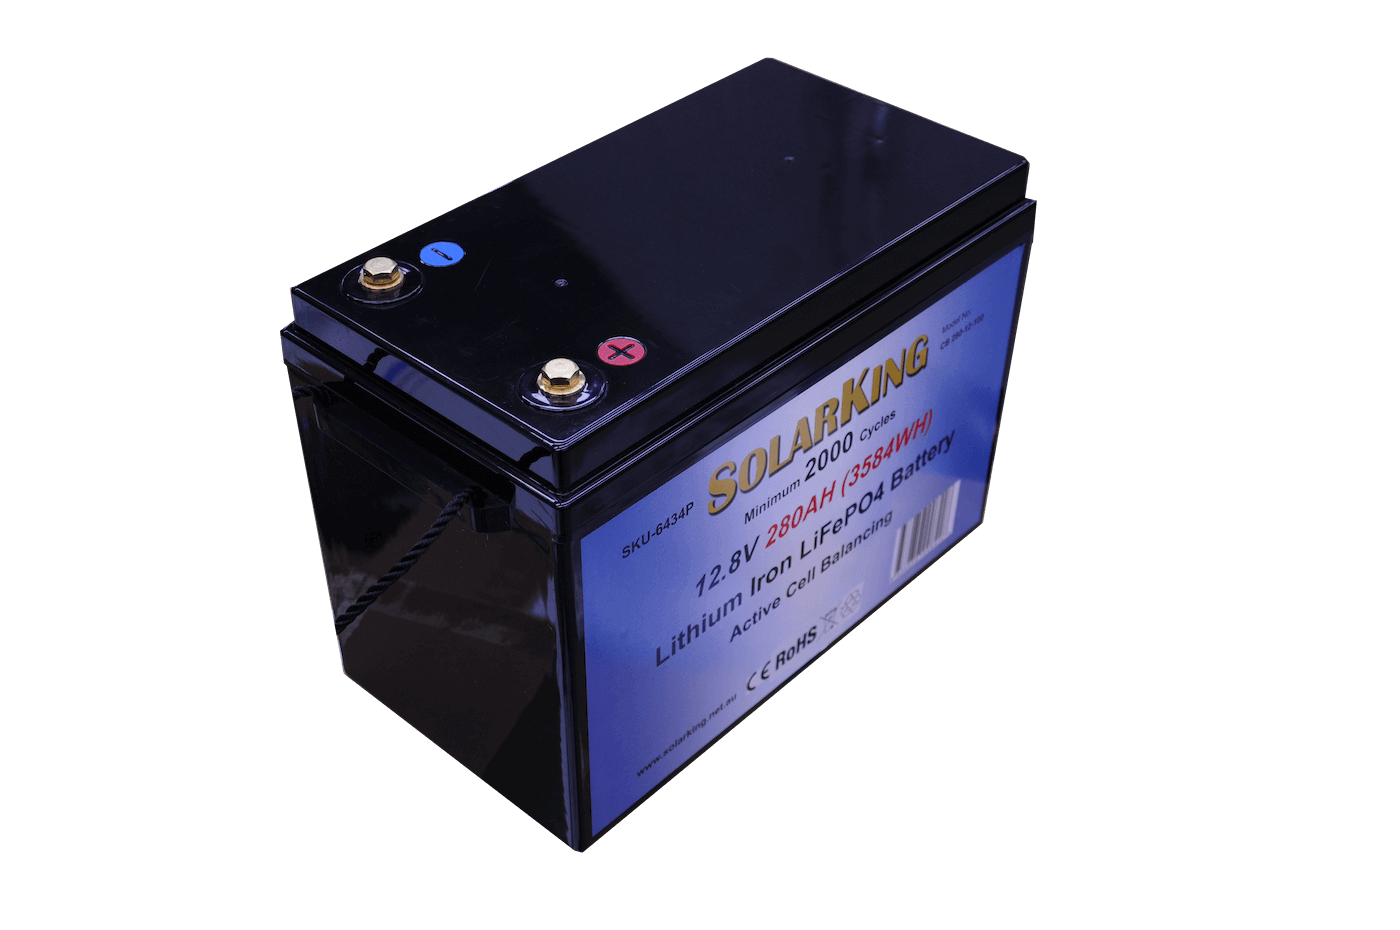 12.8V 280AH   Solarking Lithium Iron Battery Plastic Case CB-280-12-100